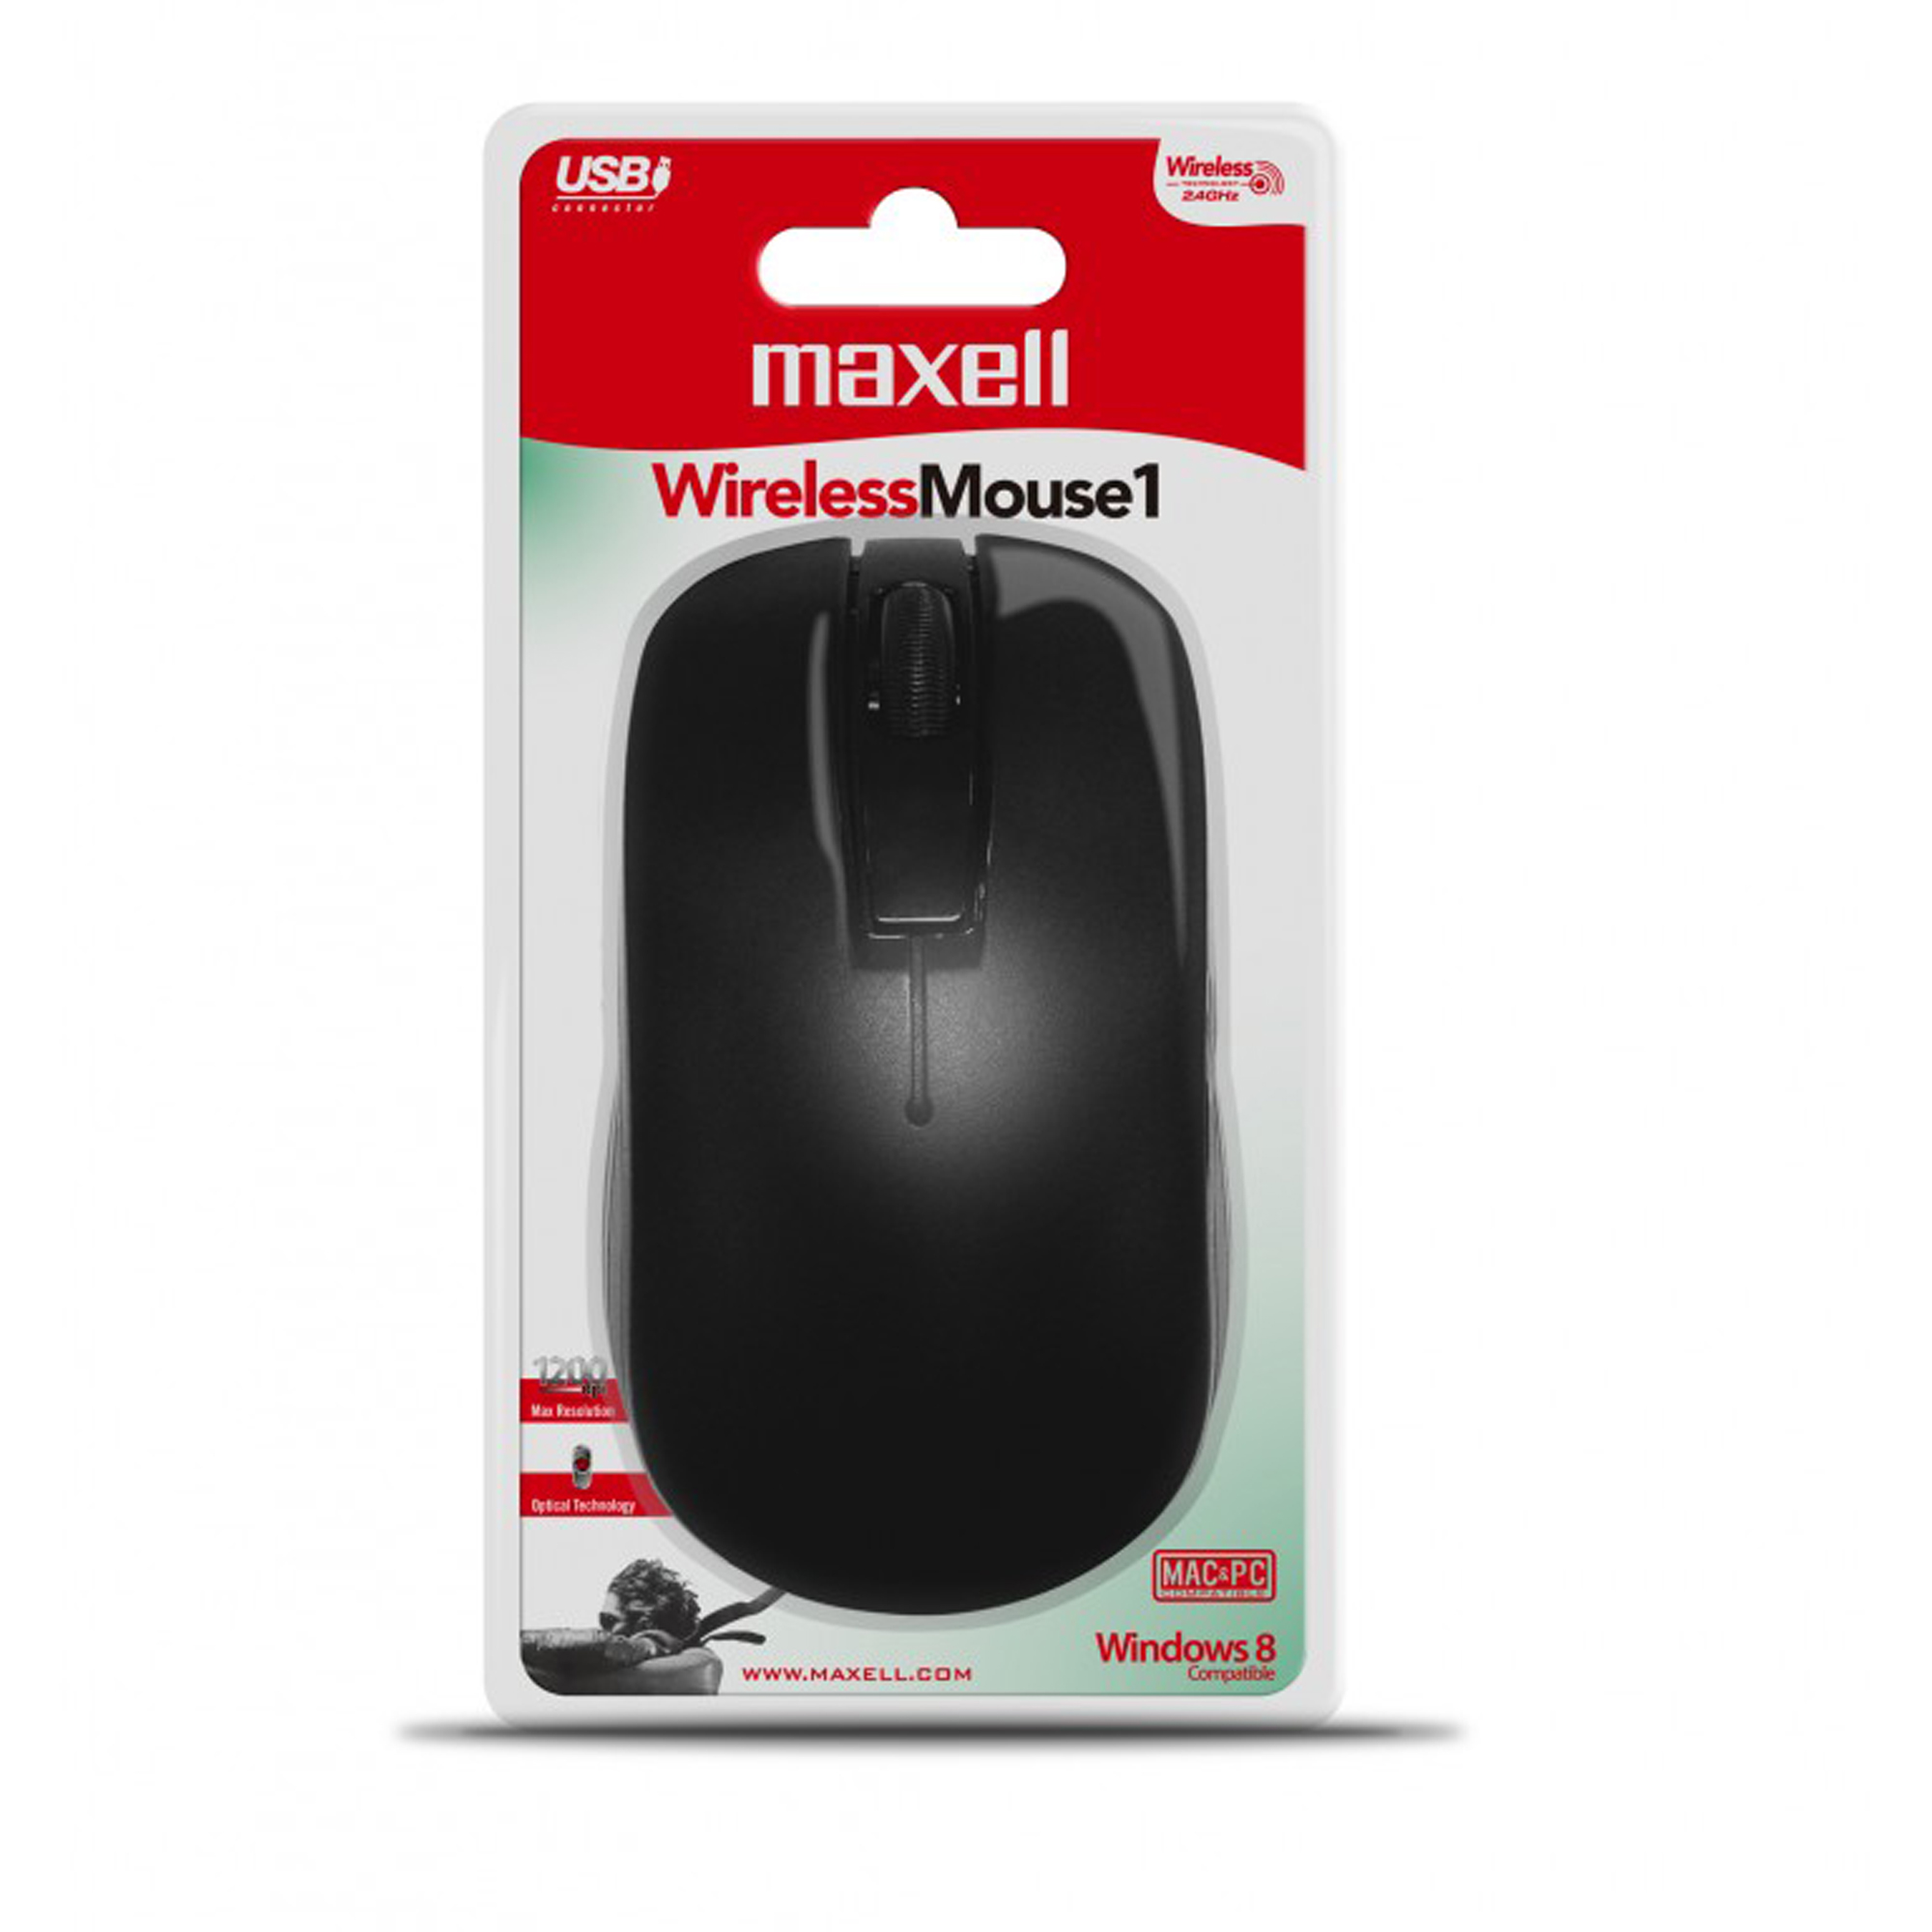 Maxell Wireless Mouse MOWL-100 Black